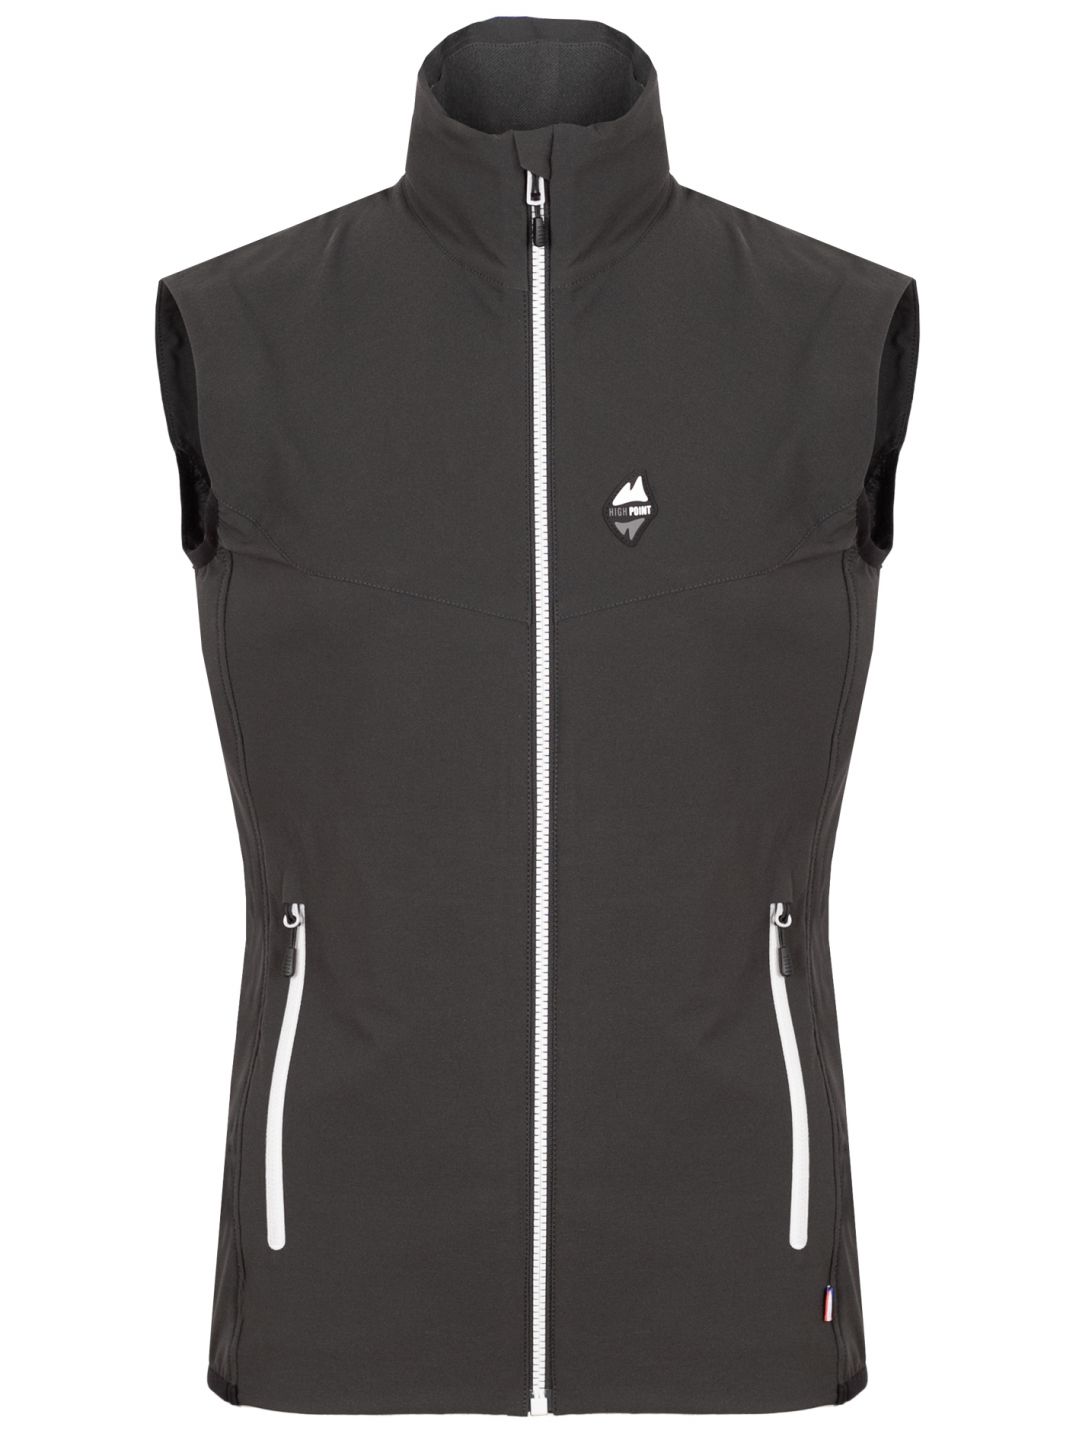 HIGH POINT Atom Lady Vest Black varianta: S